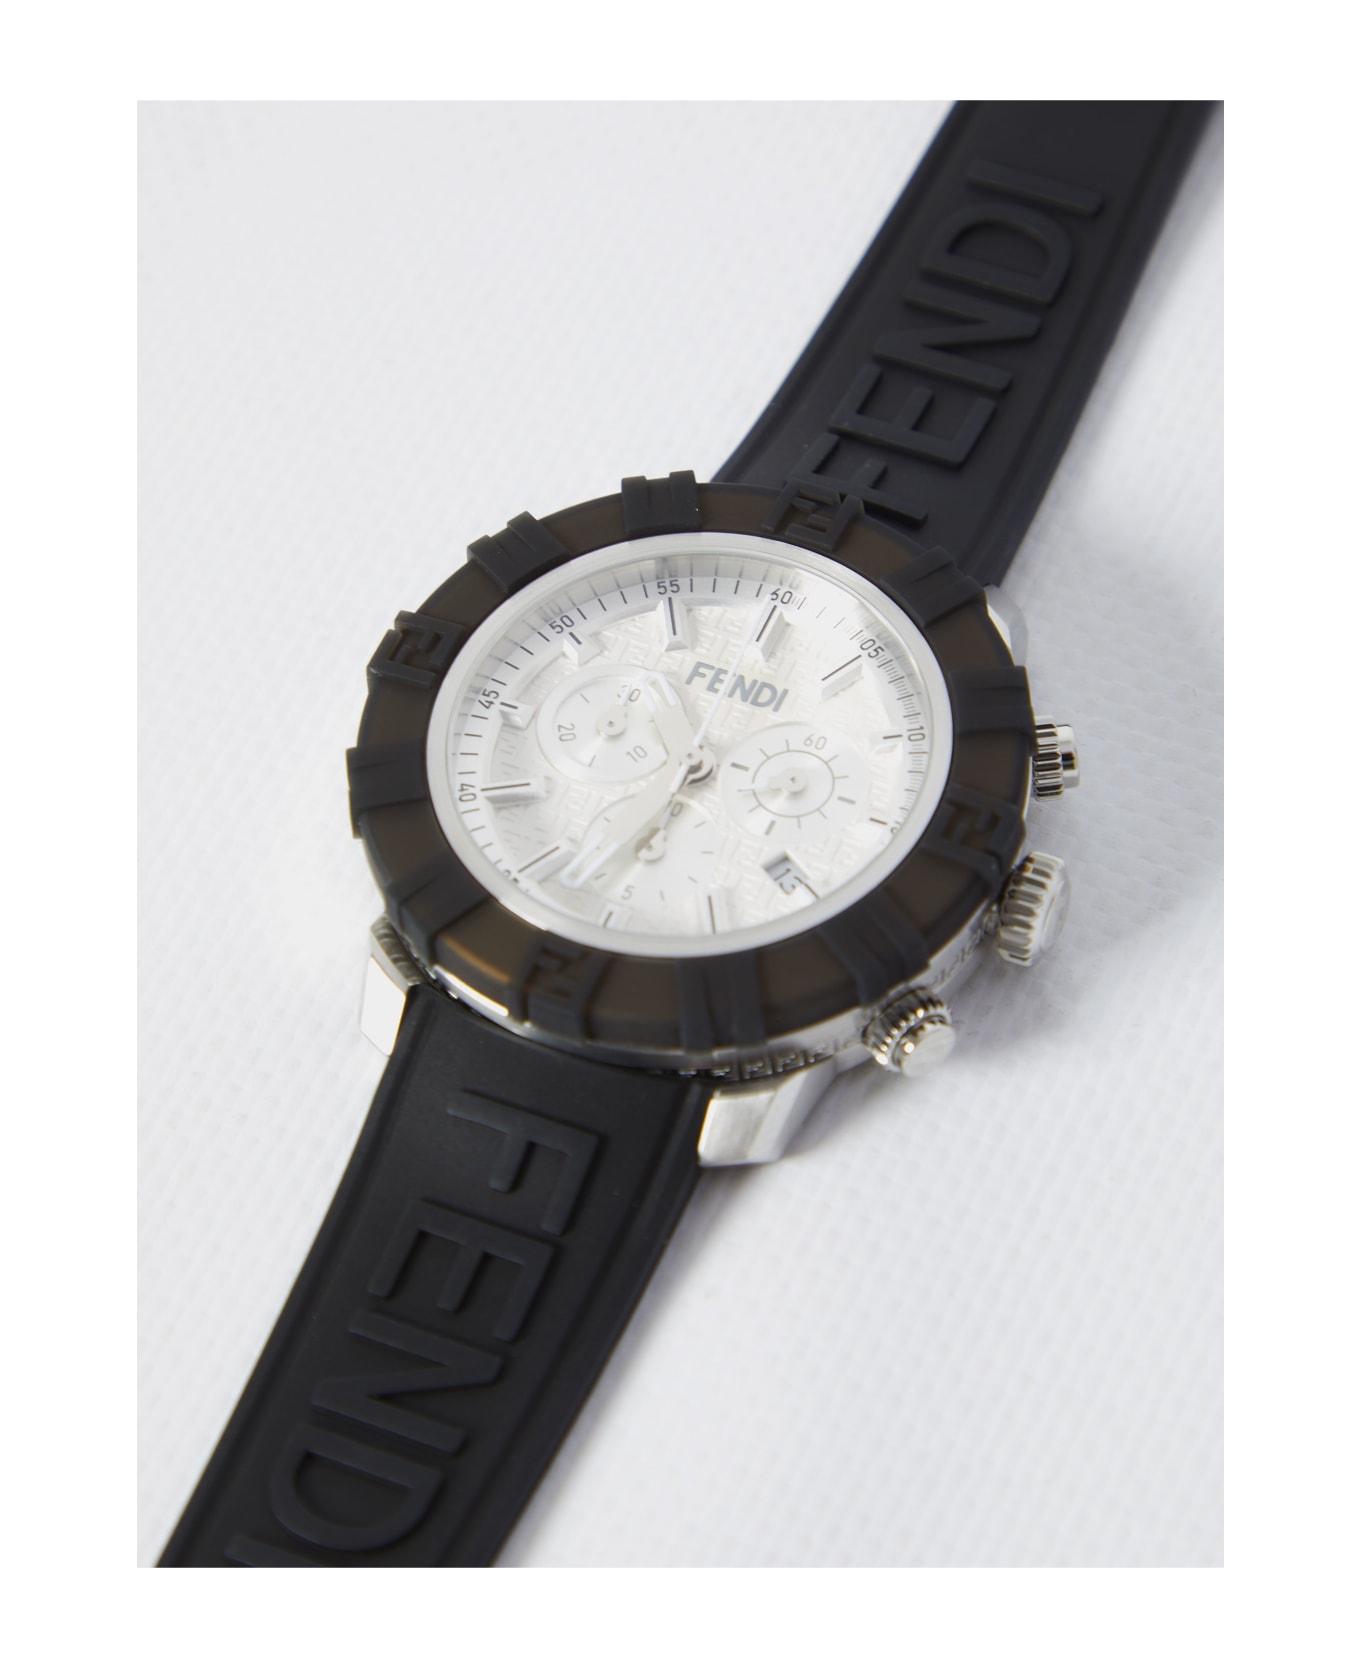 Fendi Fendastic Watch - WHITE/BLACK